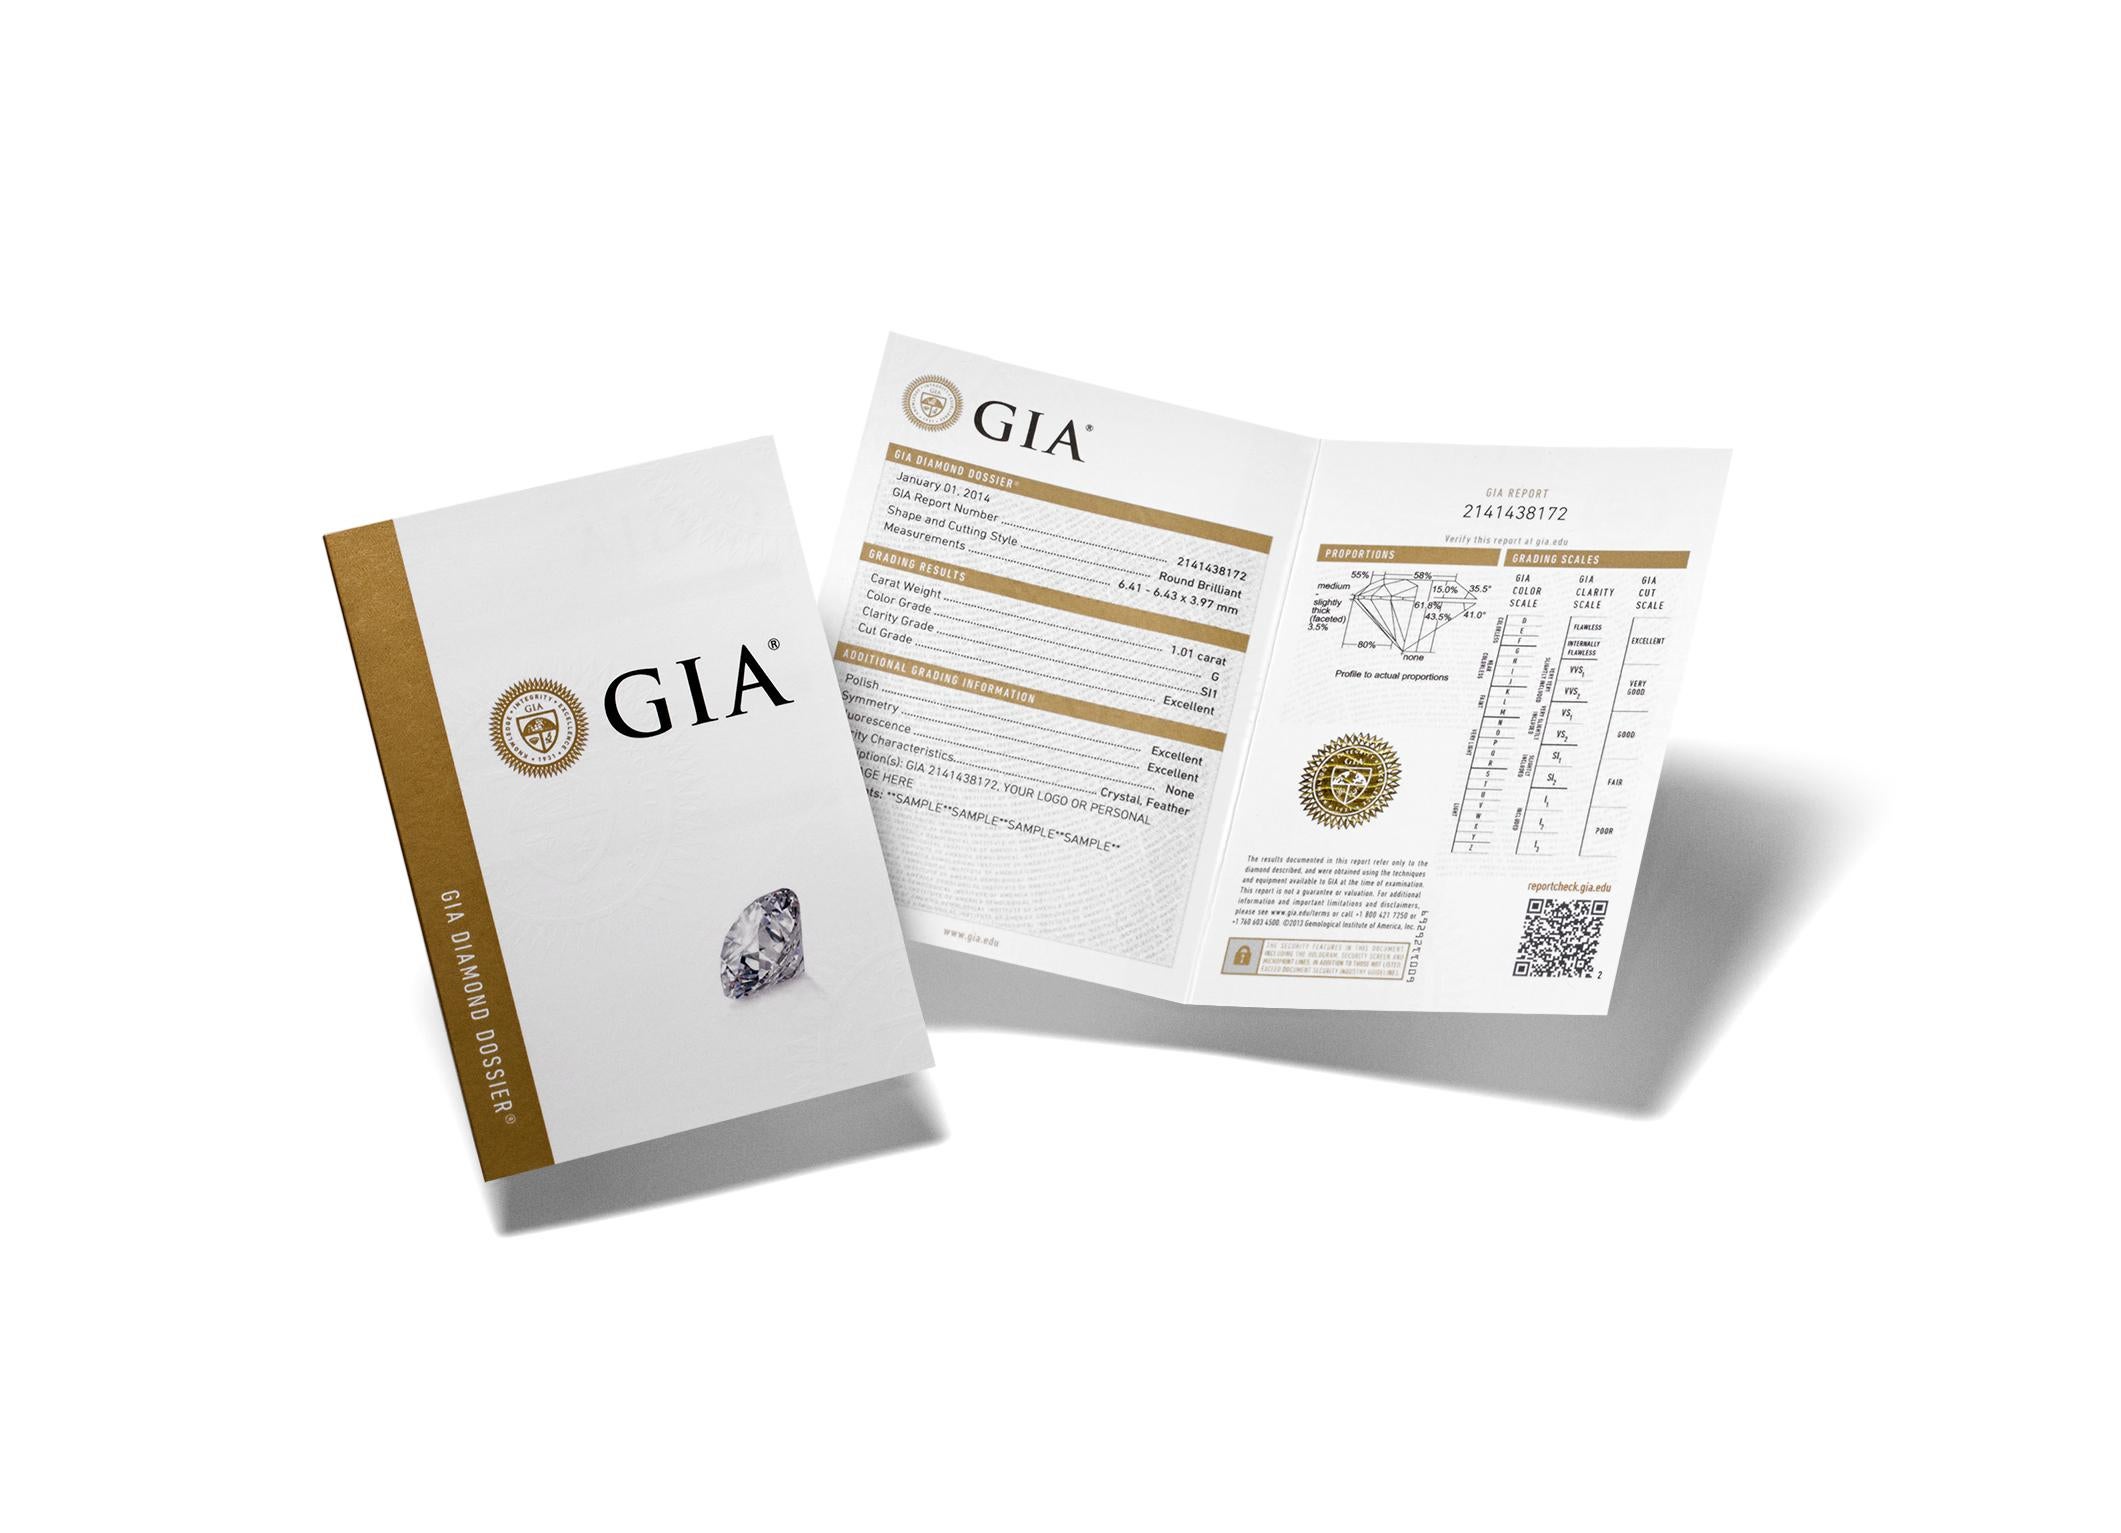 GIA Certified 0.50 Carat, E/FL, Brilliant Cut, Excellent Natural Diamond

Perfect Brilliants for perfect gifts.

5 C's:
Certificate: GIA
Carat: 0.50ct
Color: E
Clarity: FL(Flawless)
Cut: Excellent

Polish: Excellent
Symmetry: Excellent
Fluorescence: